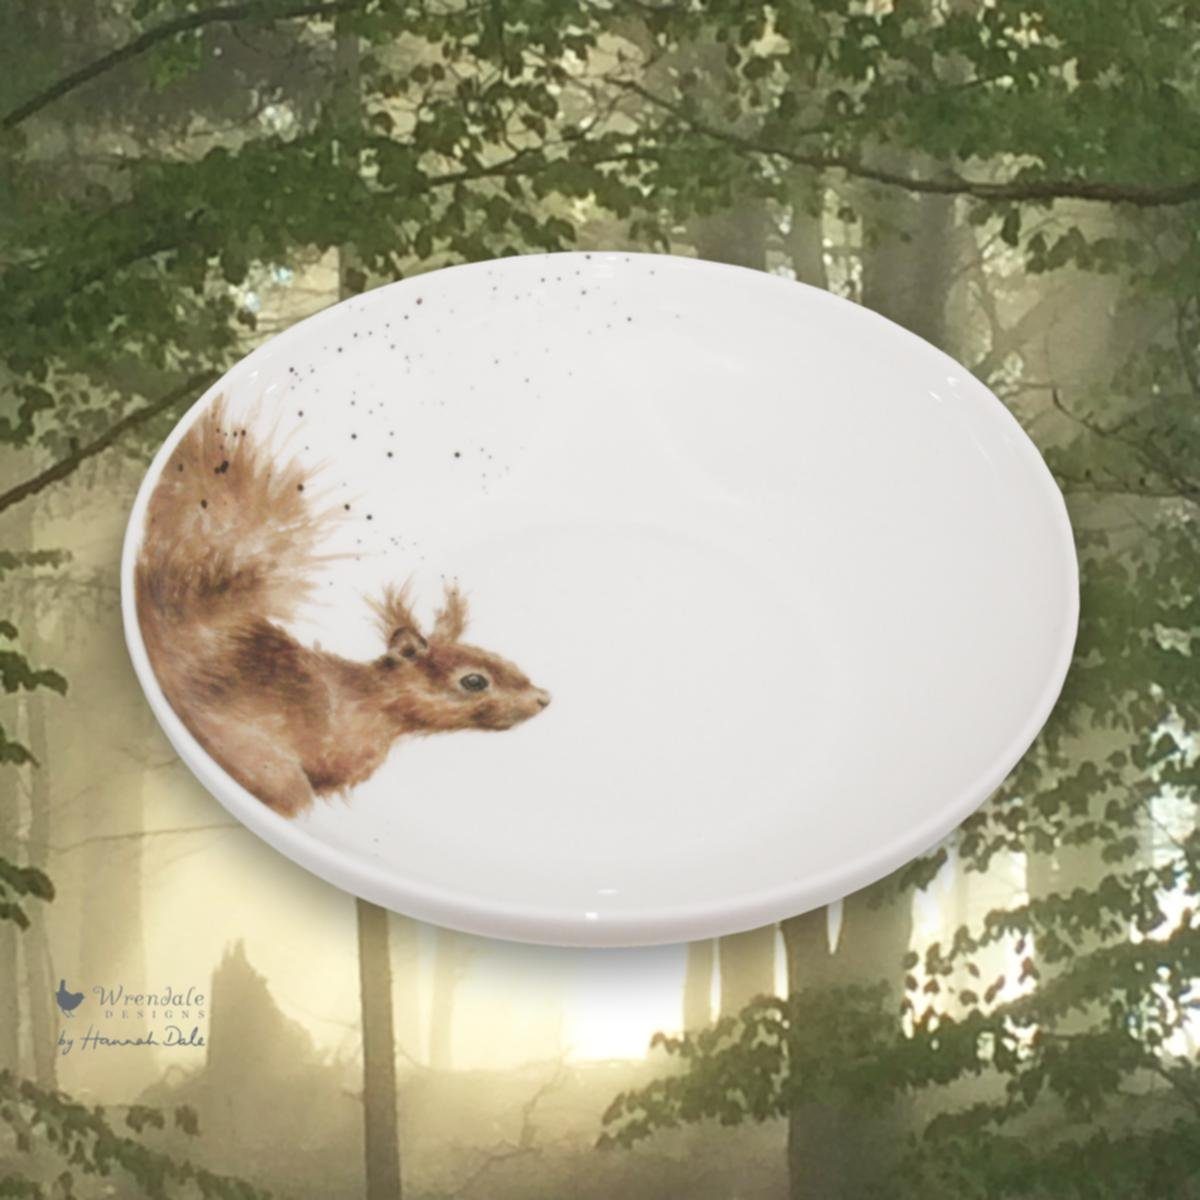 Eichhörnchen Pasta- Designs Wrendale Suppenteller Teller ca Wrendale & Porzellan 22cm